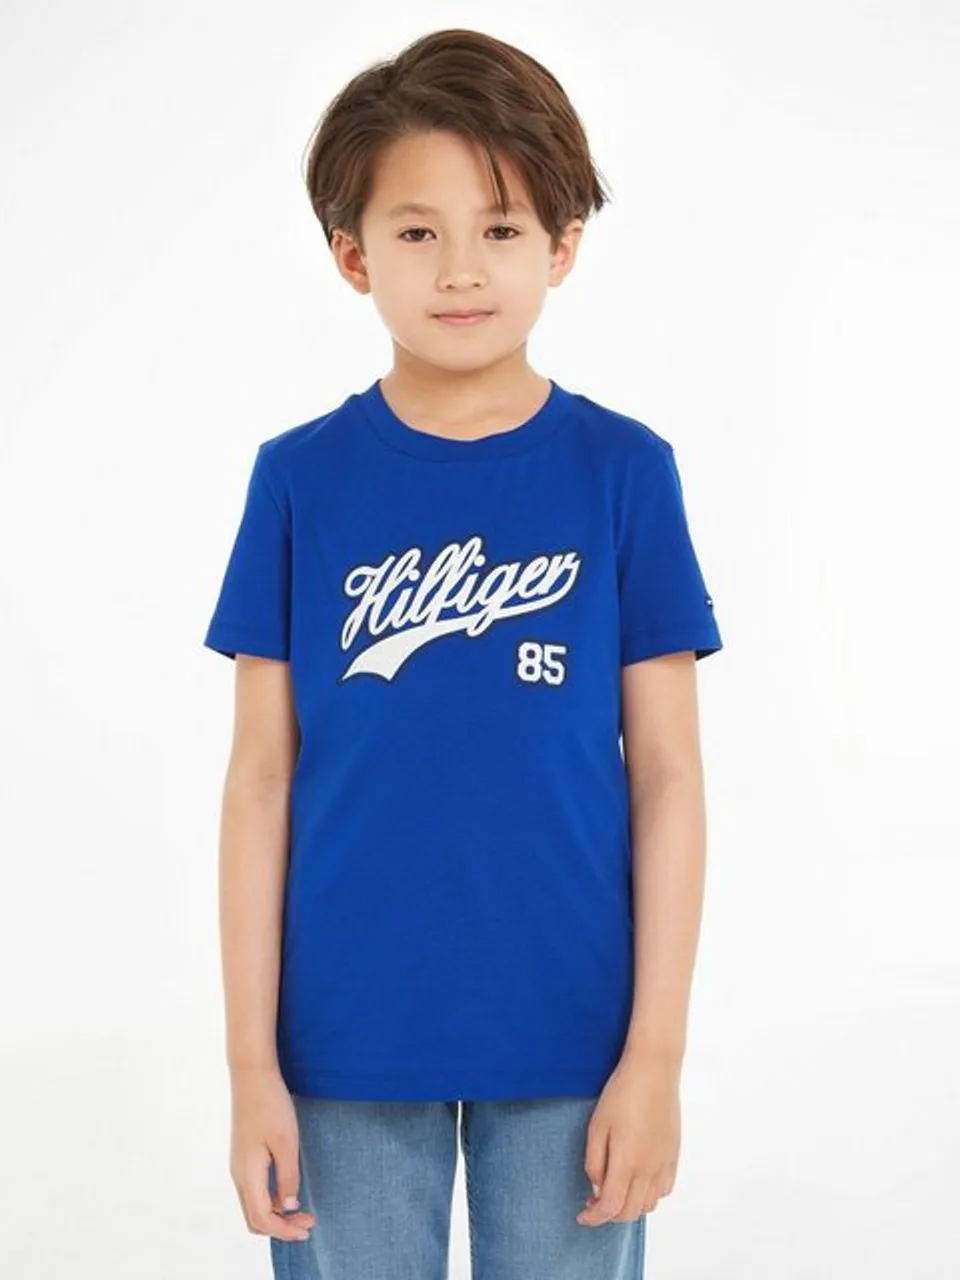 Tommy Hilfiger T-Shirt HILFIGER SCRIPT TEE S/S mit großem Logoschriftzug